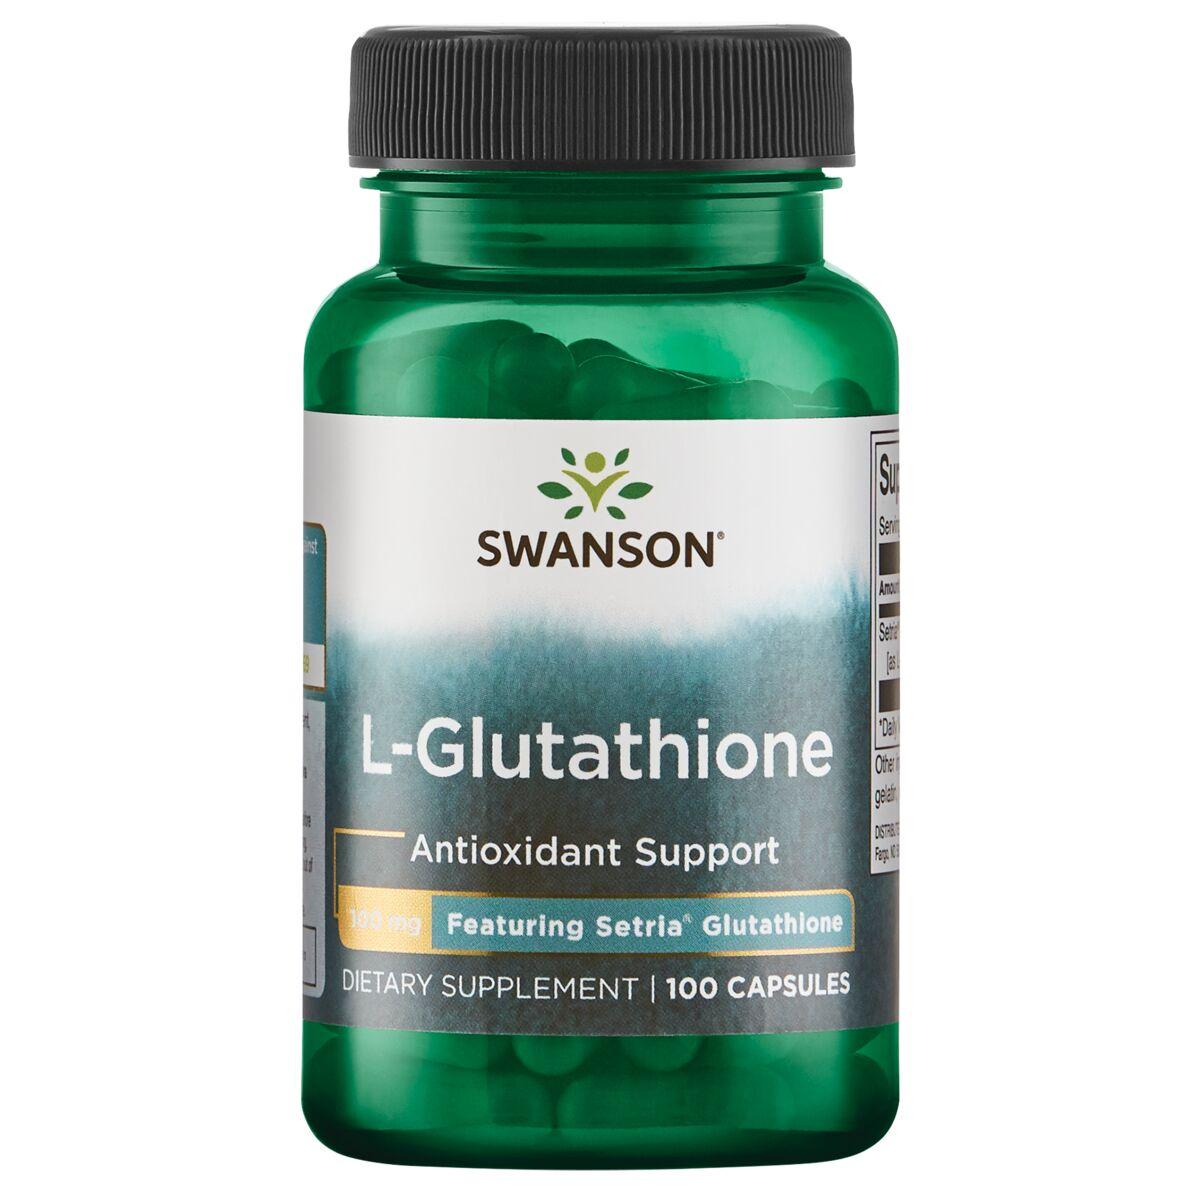 Swanson Premium L-Glutathione - Featuring Setria Glutathione Supplement Vitamin 100 mg 100 Caps